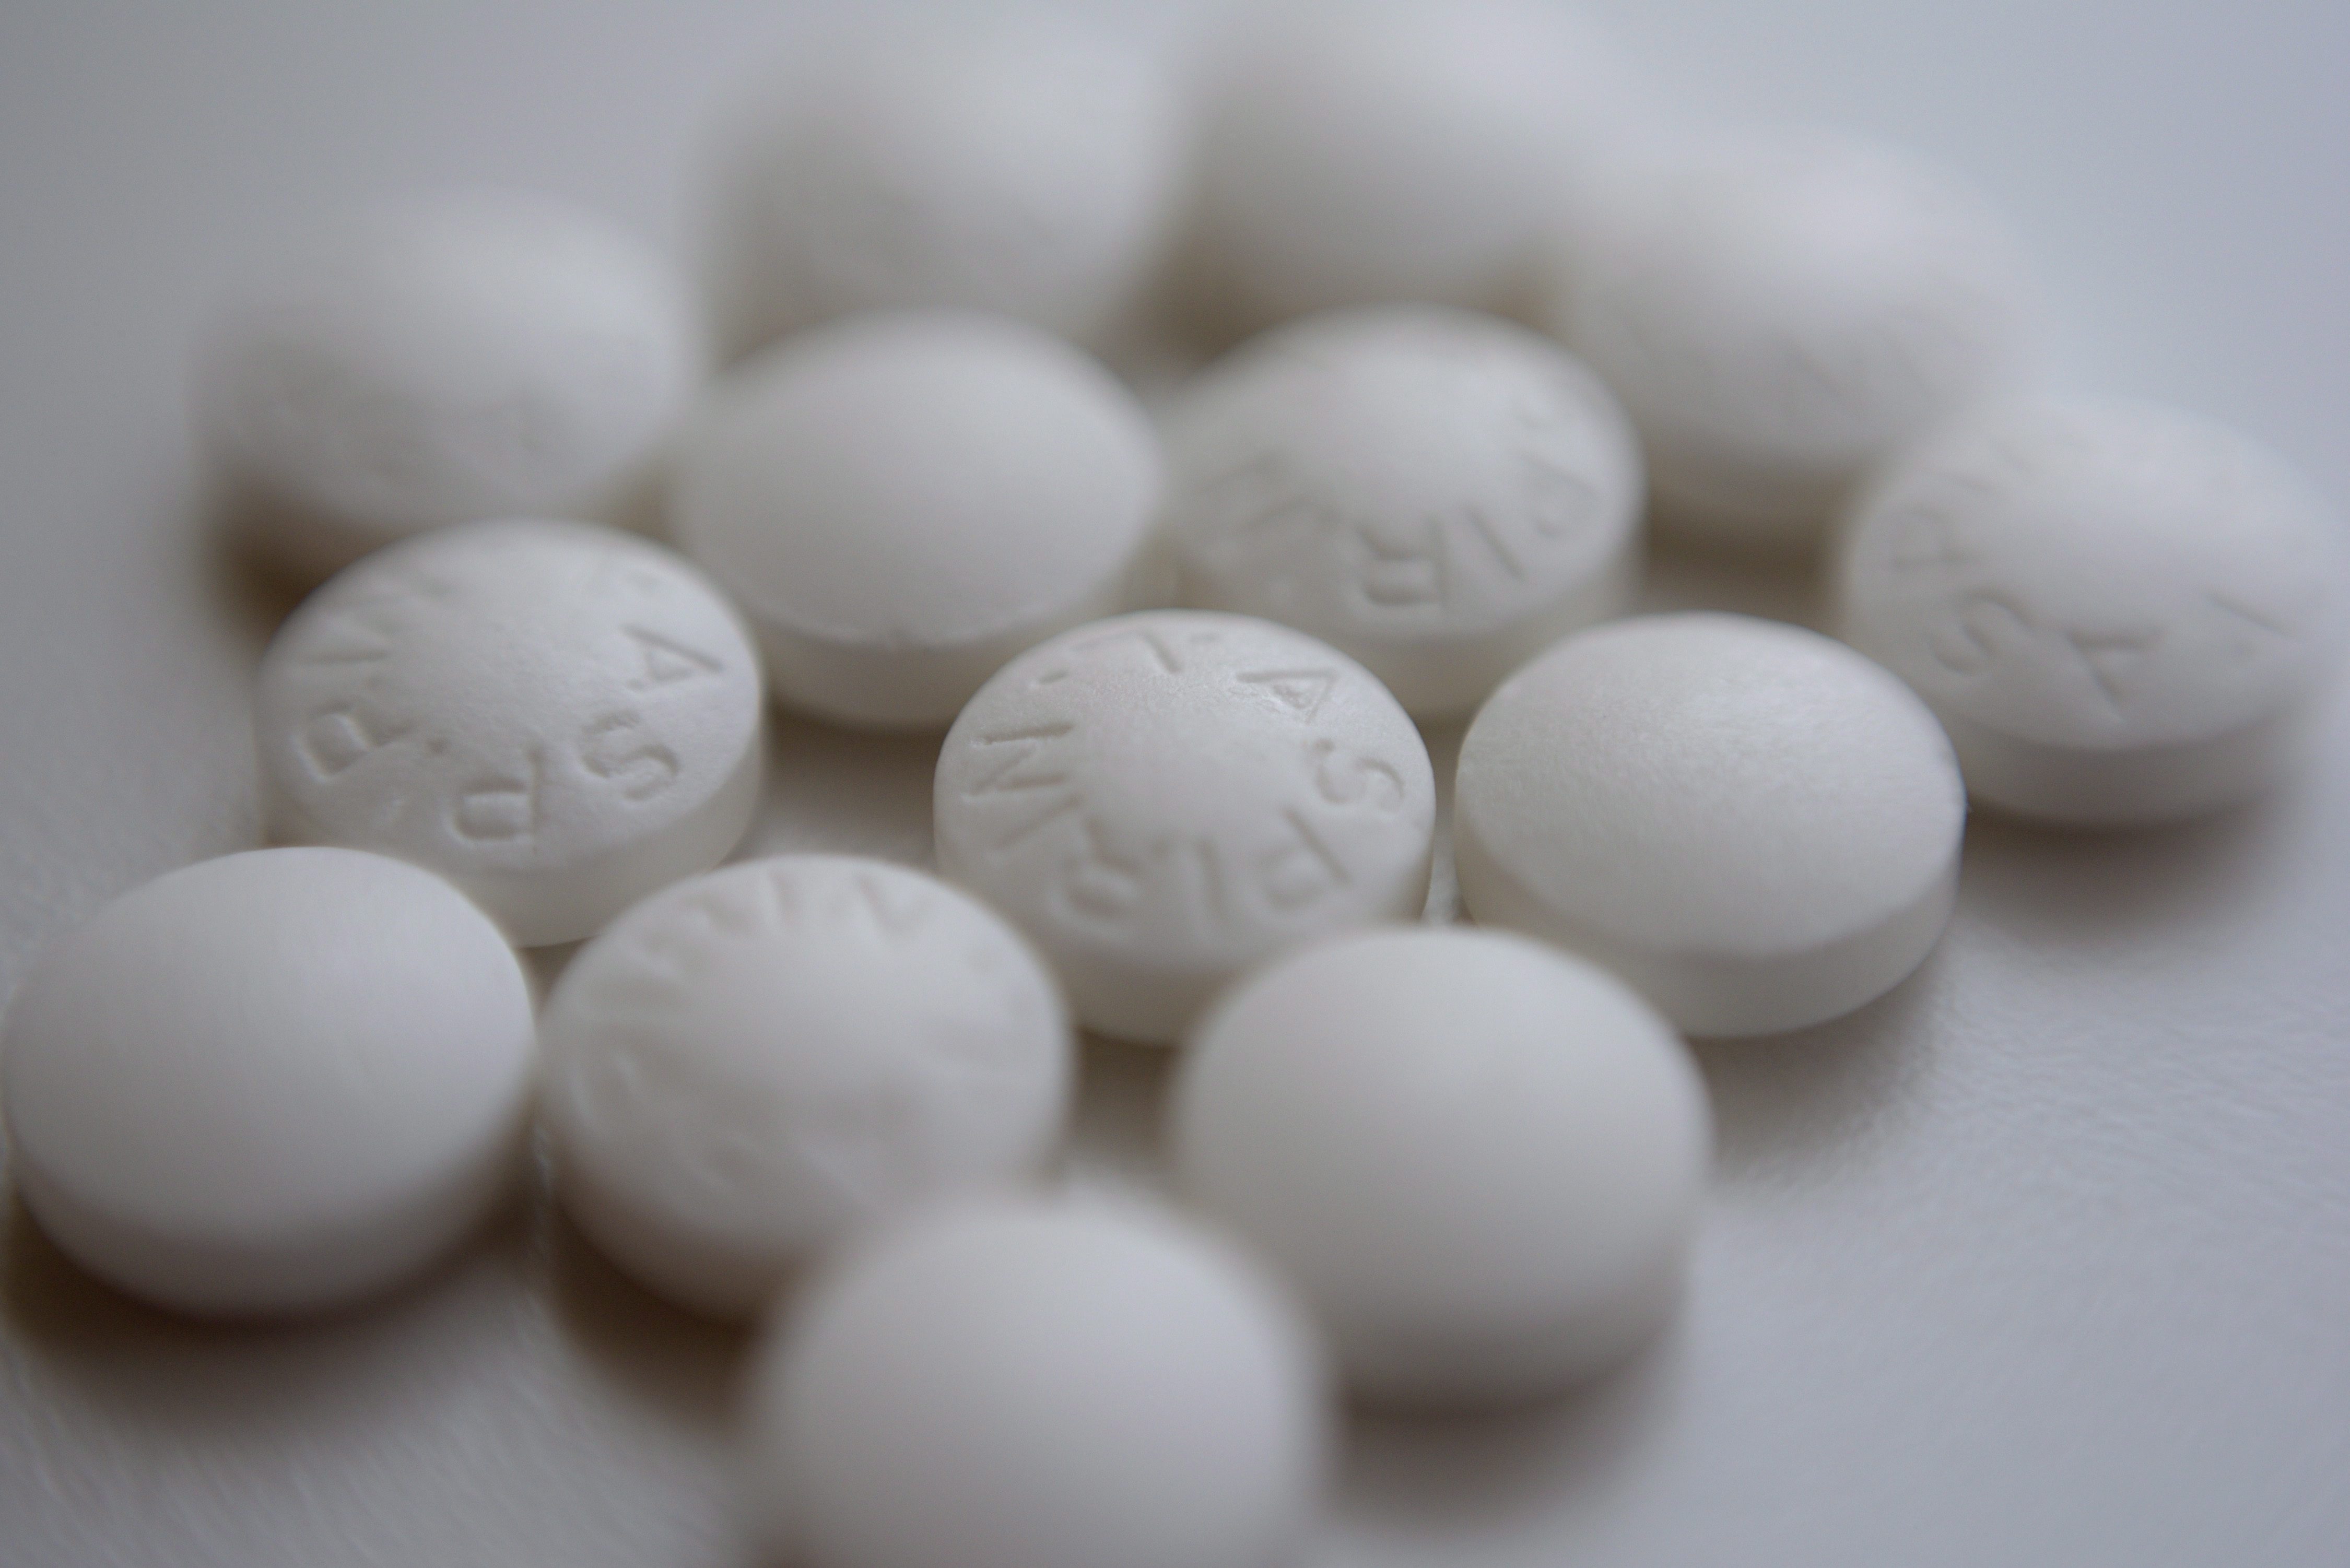 Aspirin doesn't reduce heart attack risk: Australian study